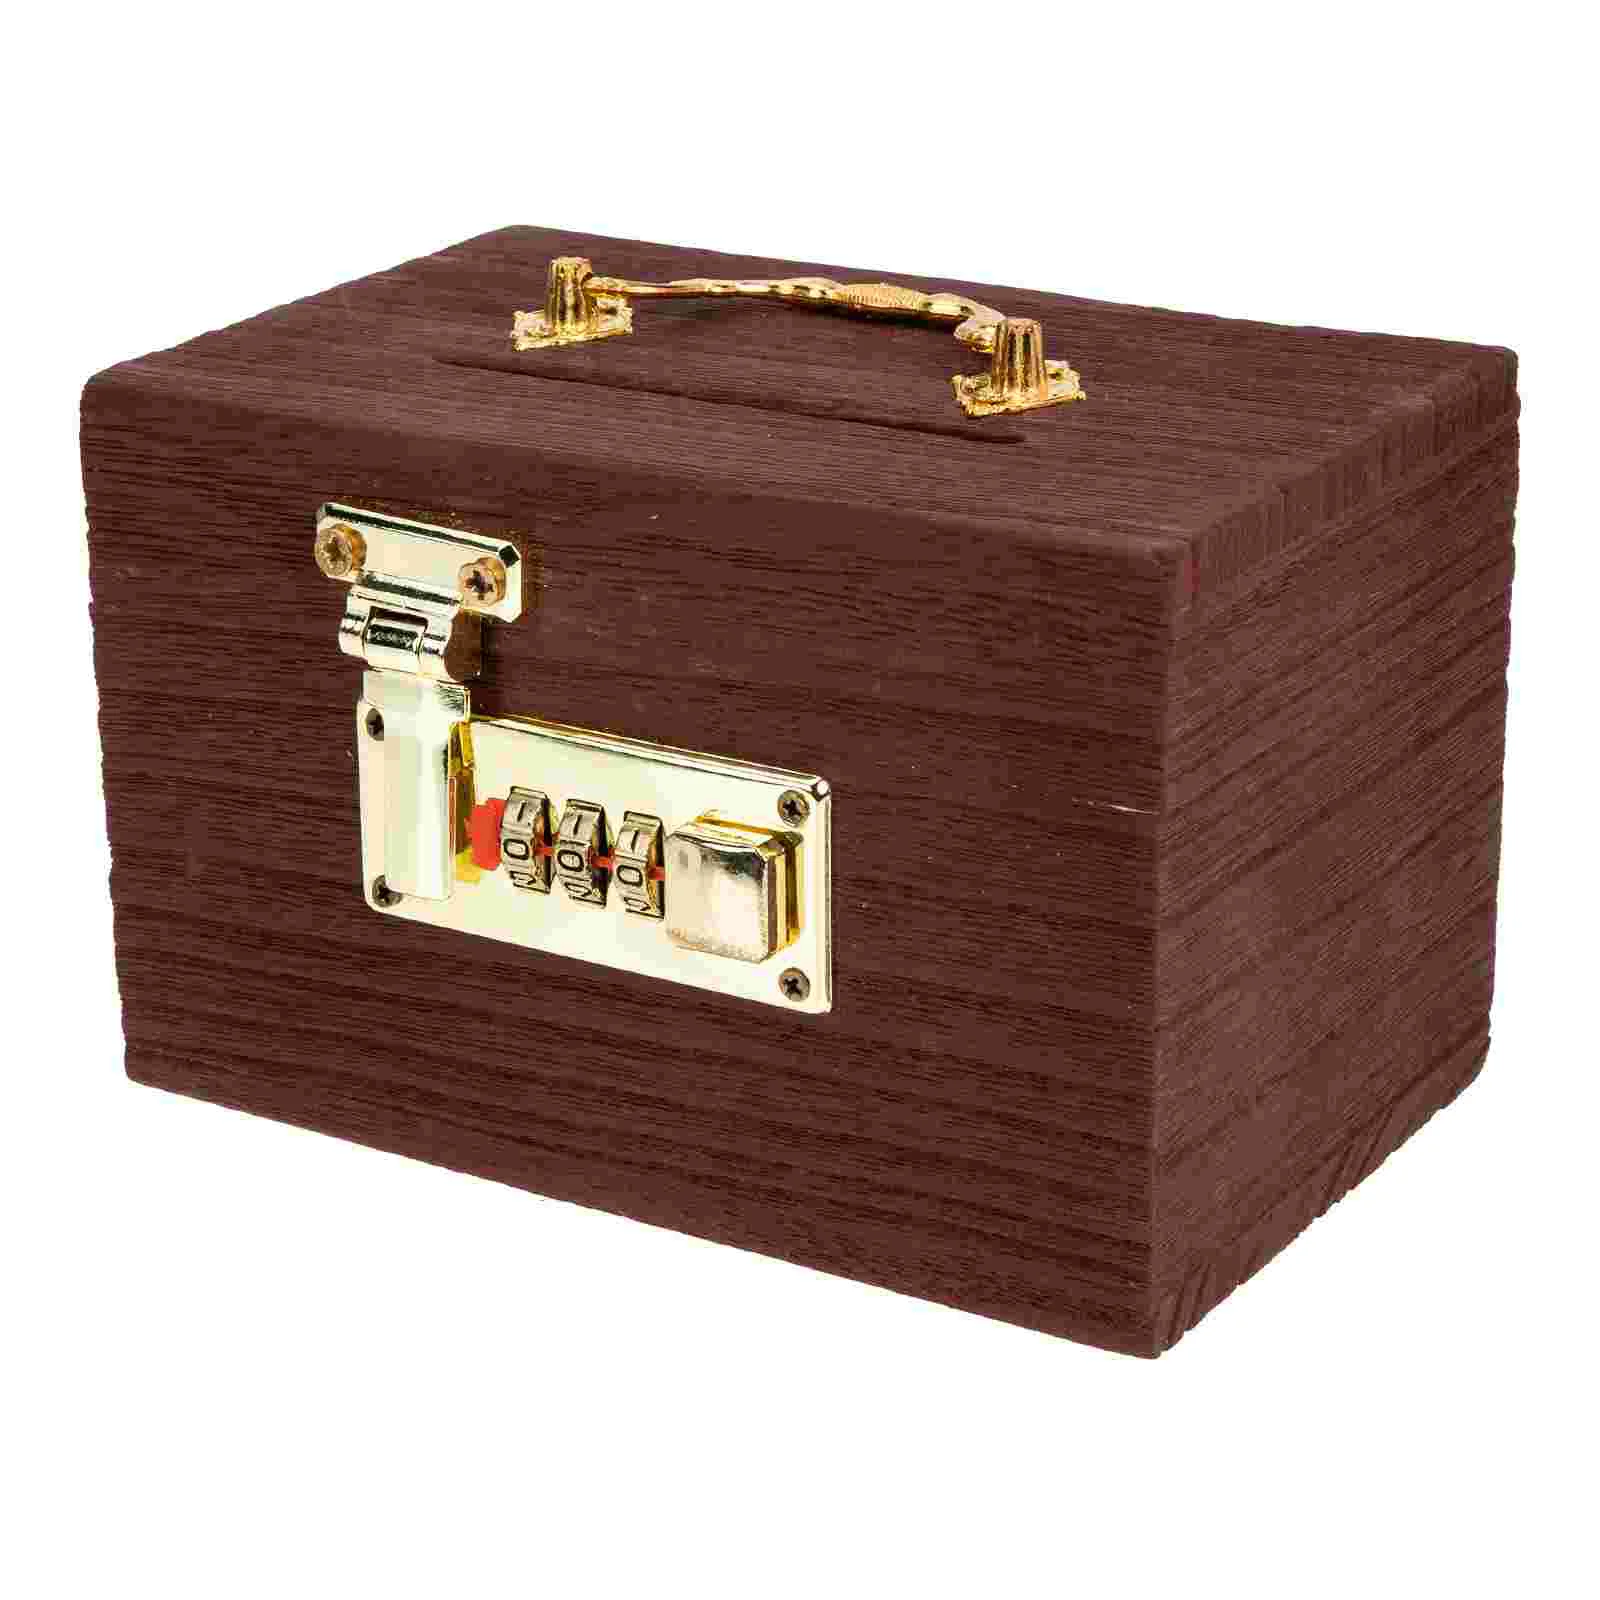 

Box Treasure Wooden Pirate Lock Wood Bank Jewelry Cash Trinket Case Storage Piggy Money Coin Vintage Keepsake Decorative Kids